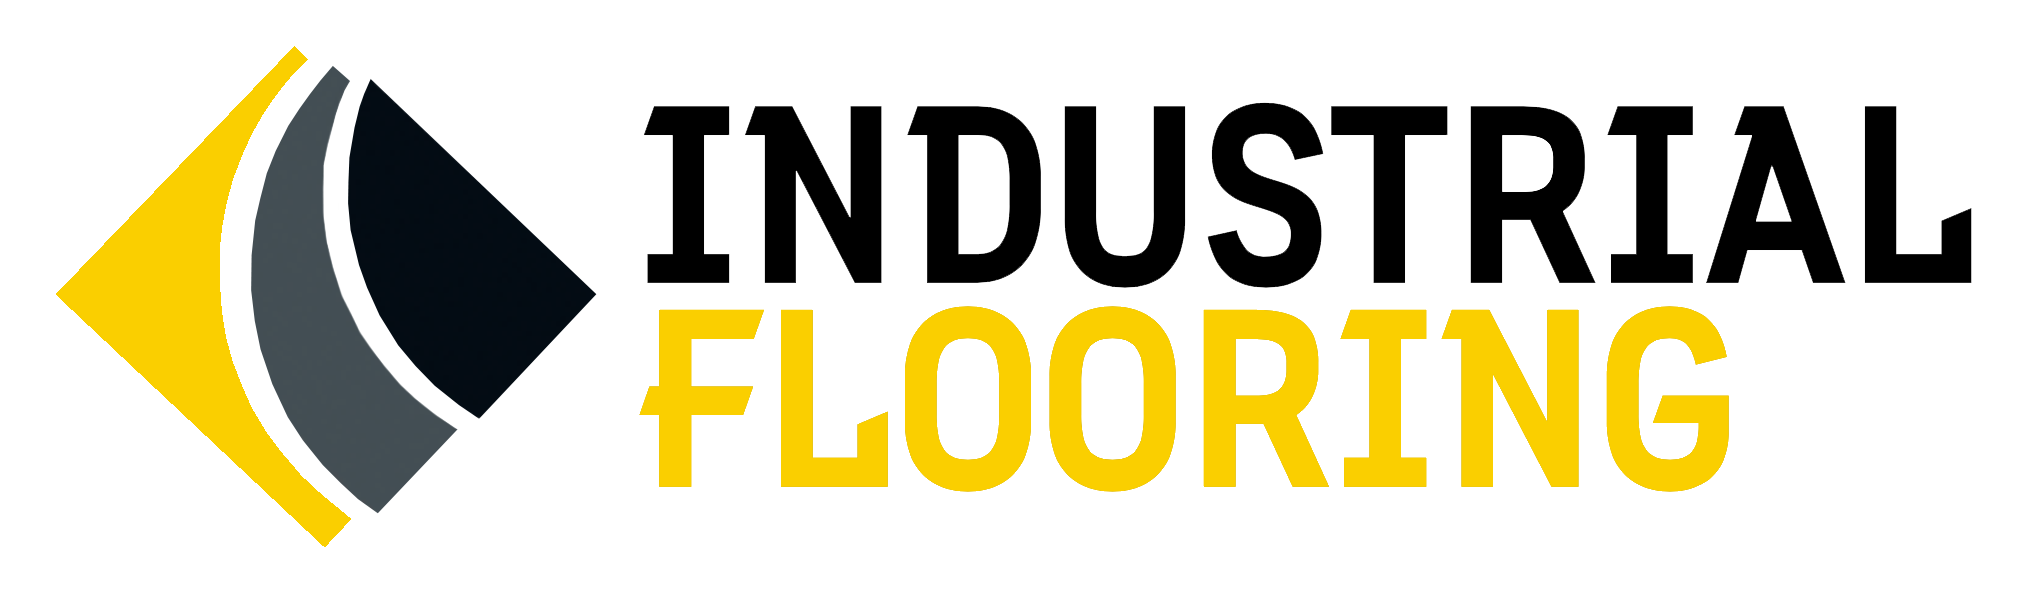 industrialflooring.pl logo